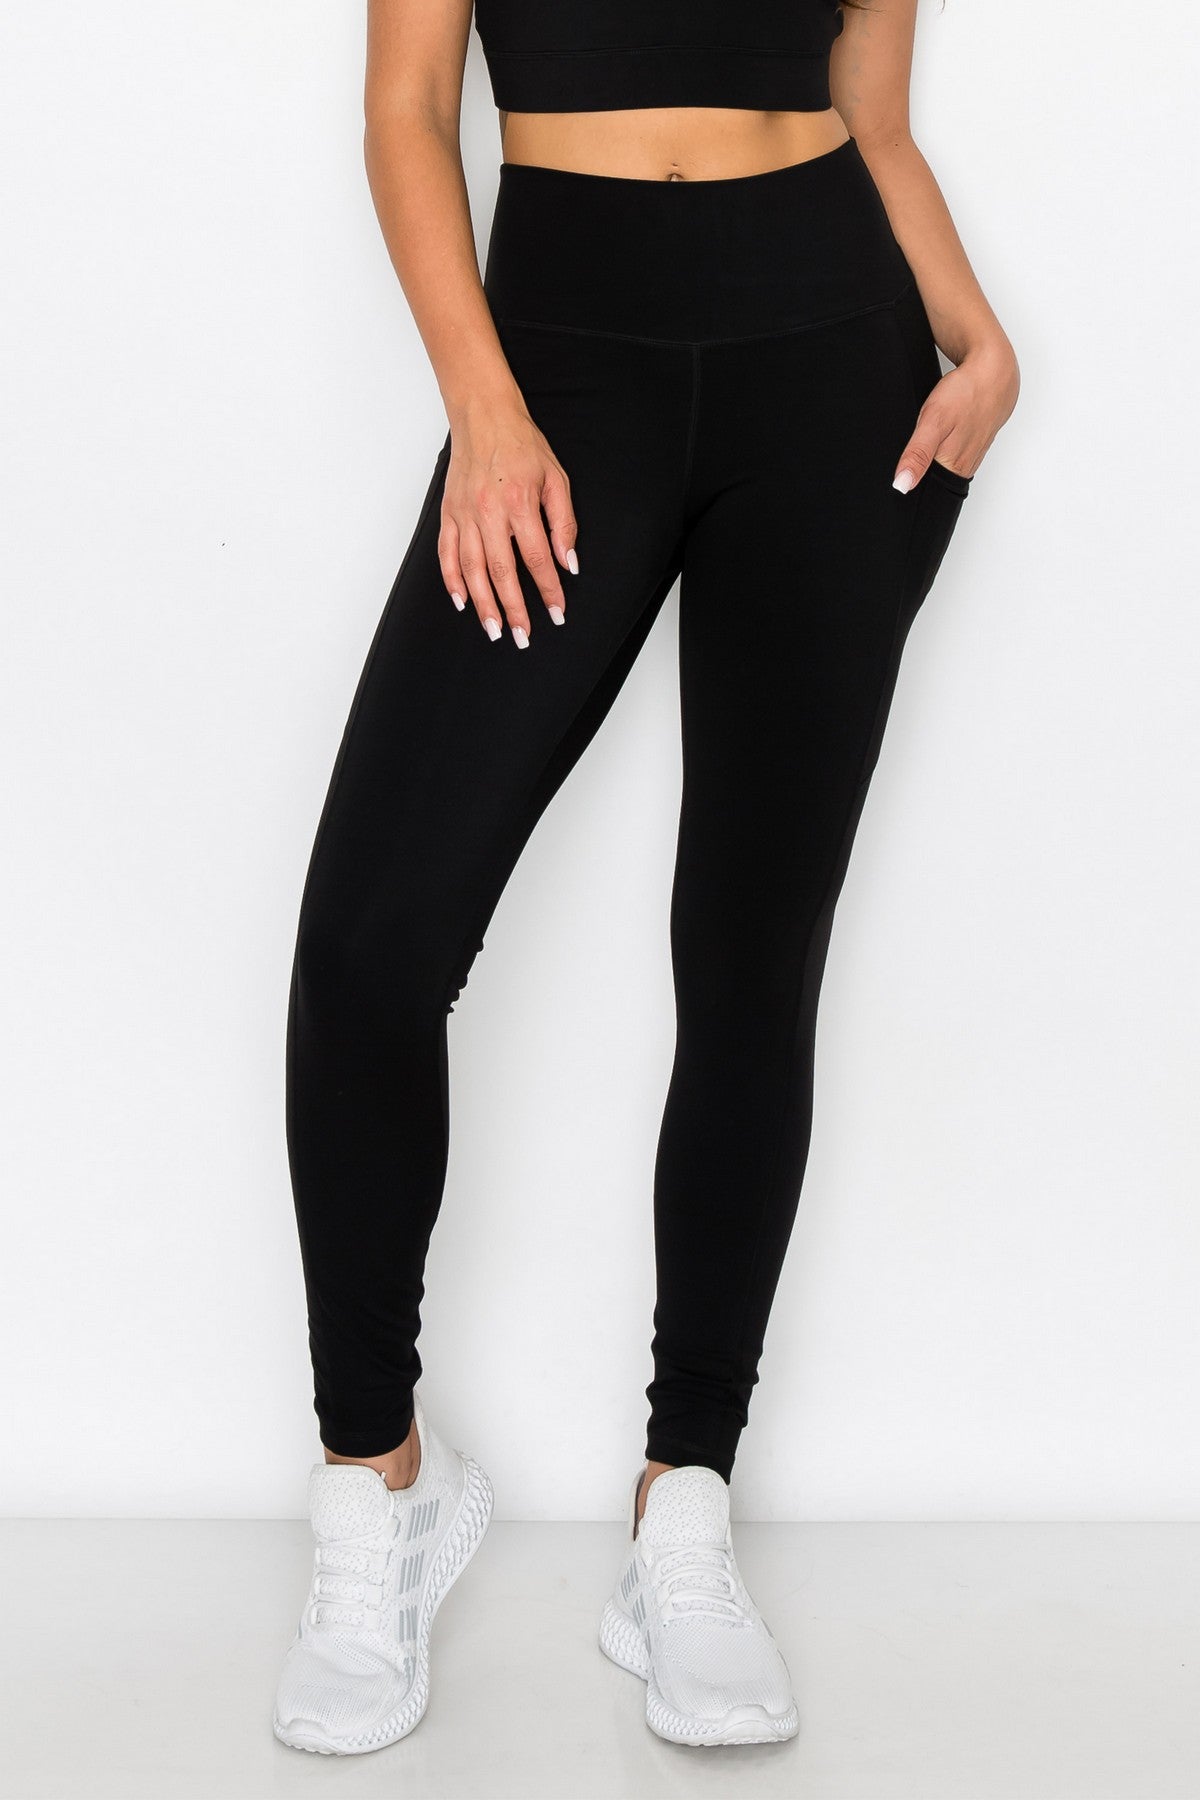 Black Activewear Pocket Pants - iBESTEST.com